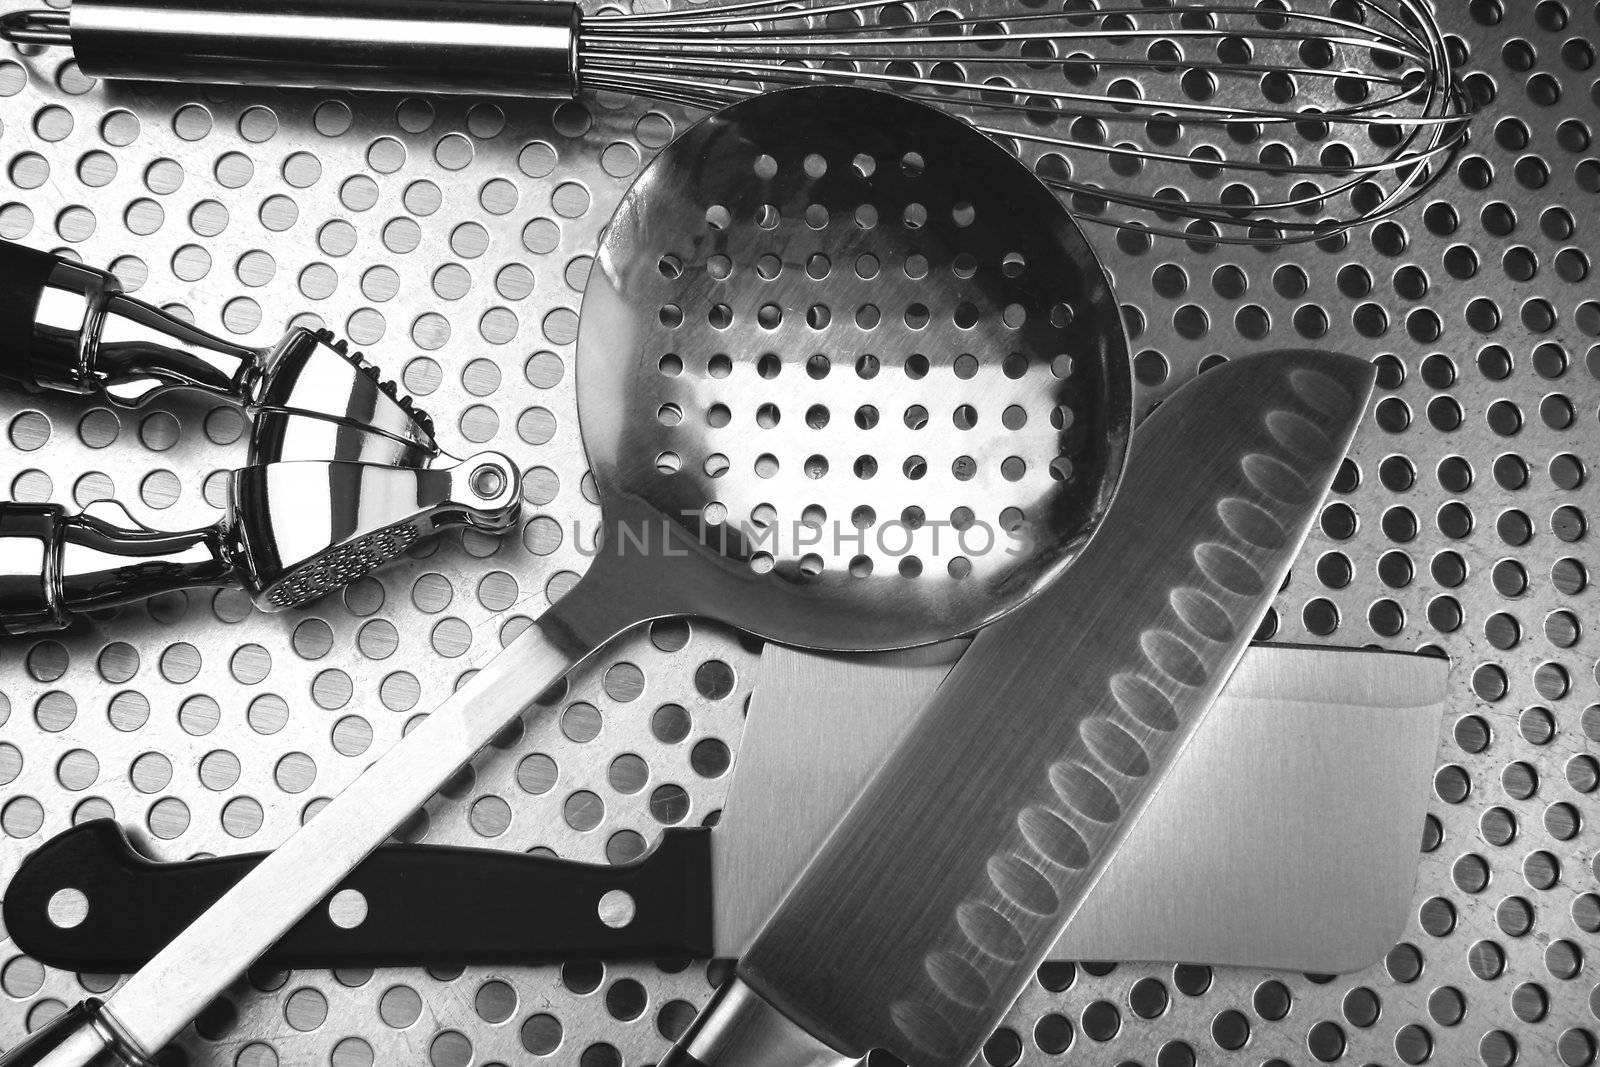 Kitchen utensils on stainless steel by Sandralise